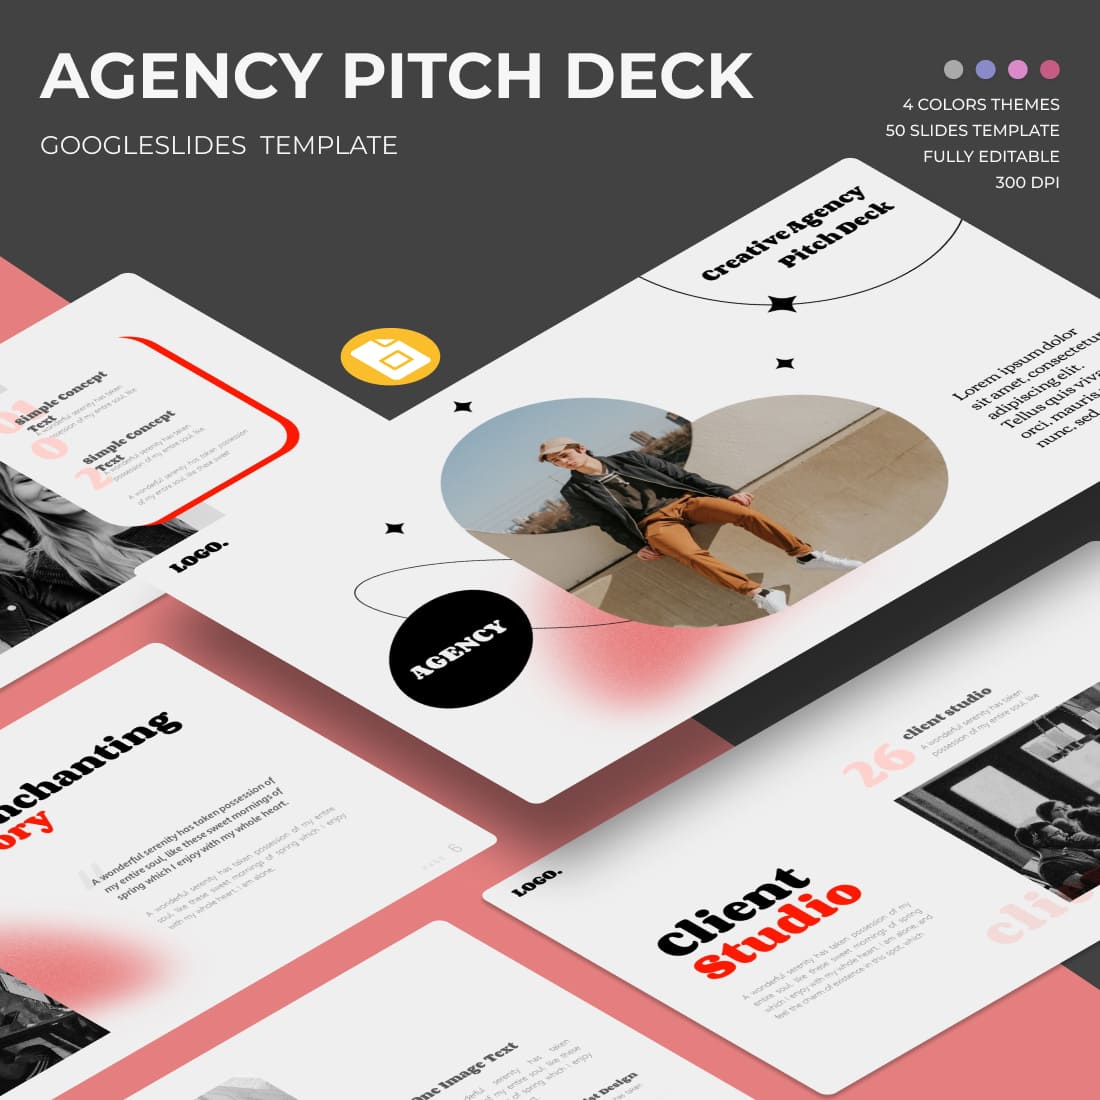 Agency Pitch Deck Google Slides Theme.